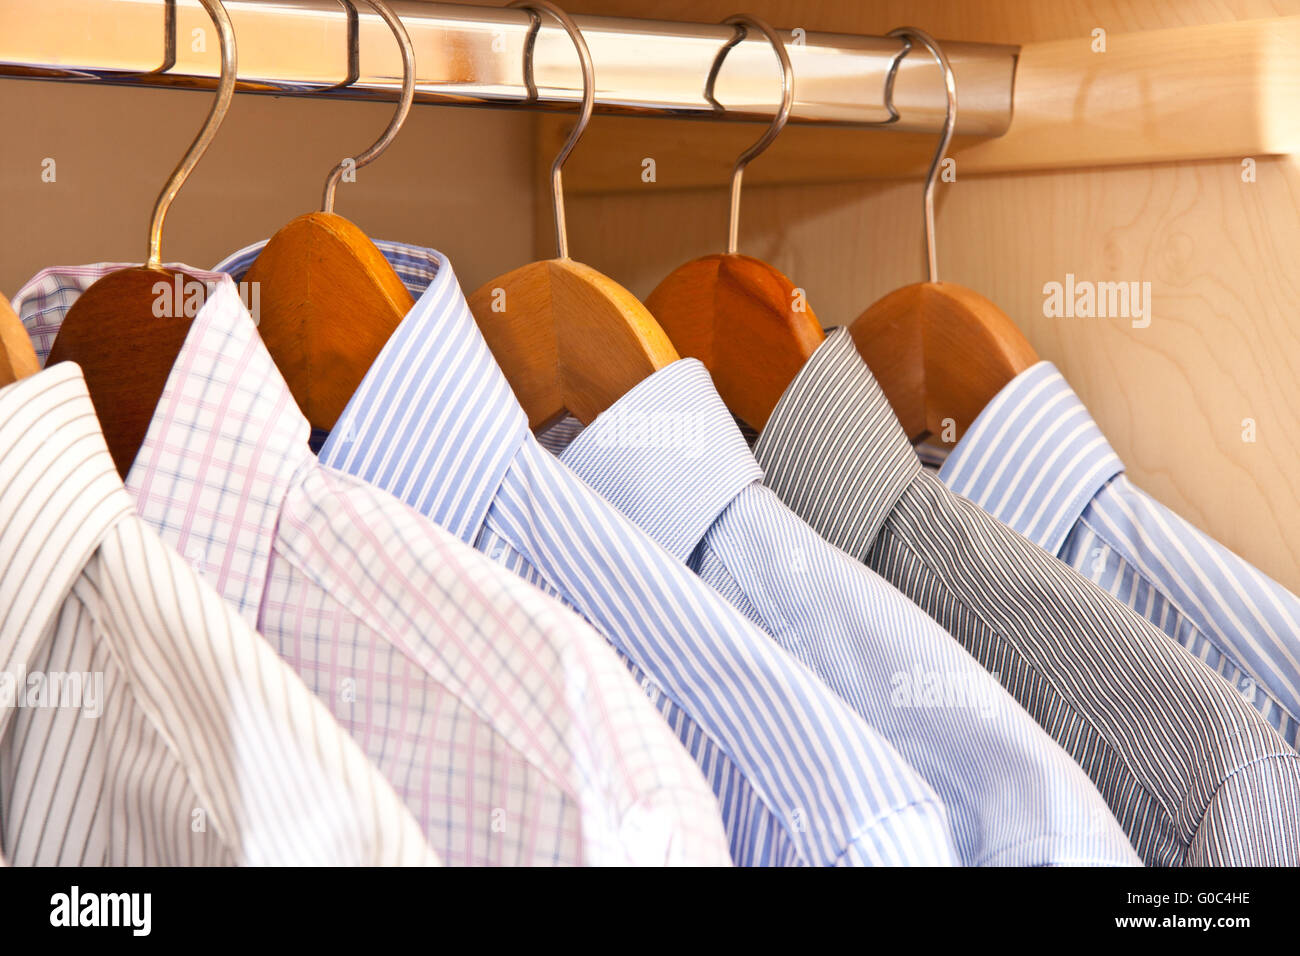 hanging shirts Stock Photo